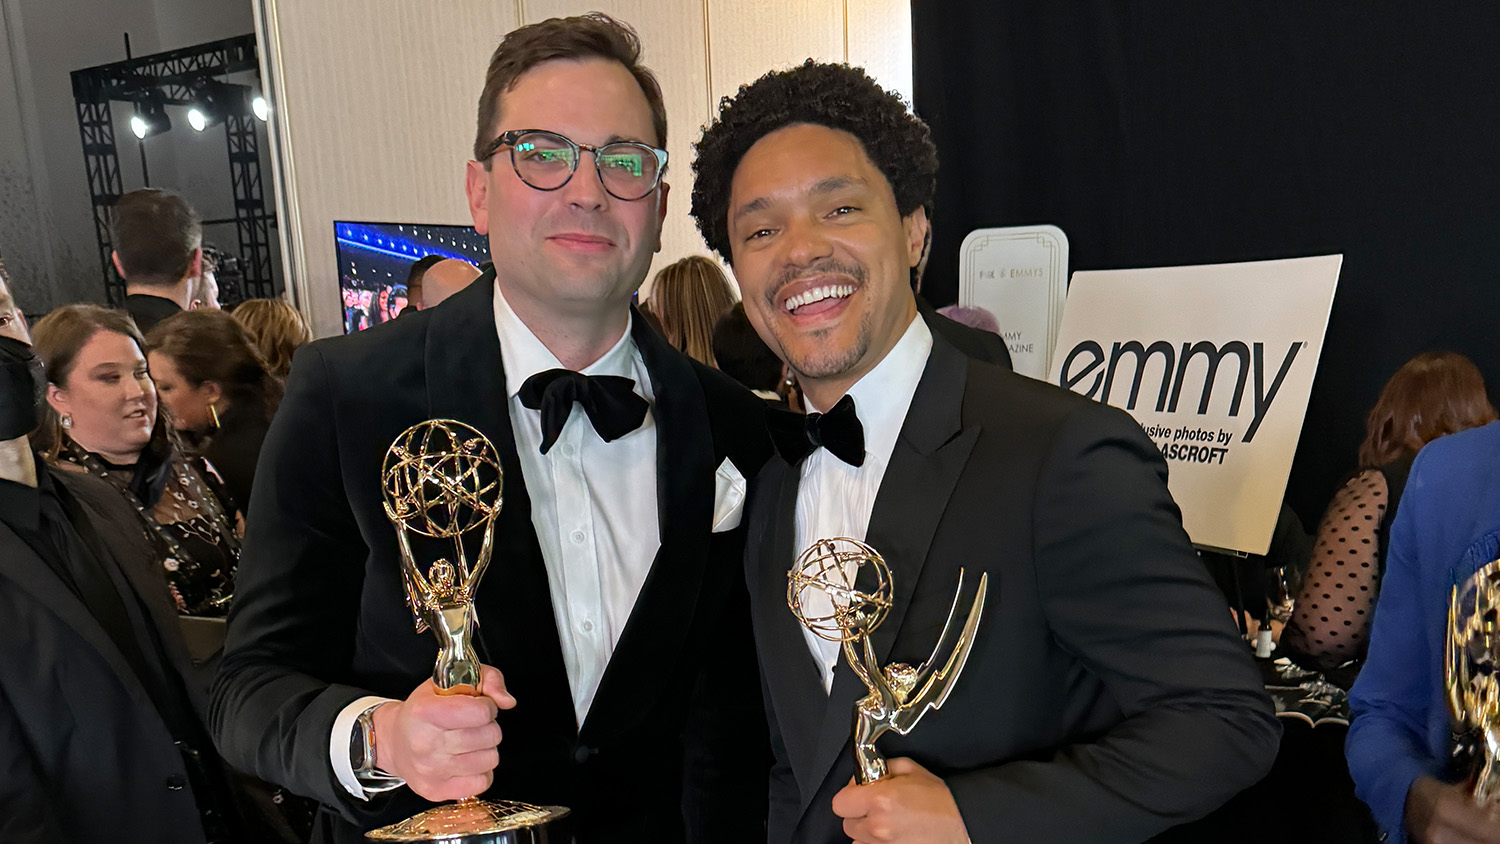 David Paul Meyer and Trevor Noah with their Emmy awards.